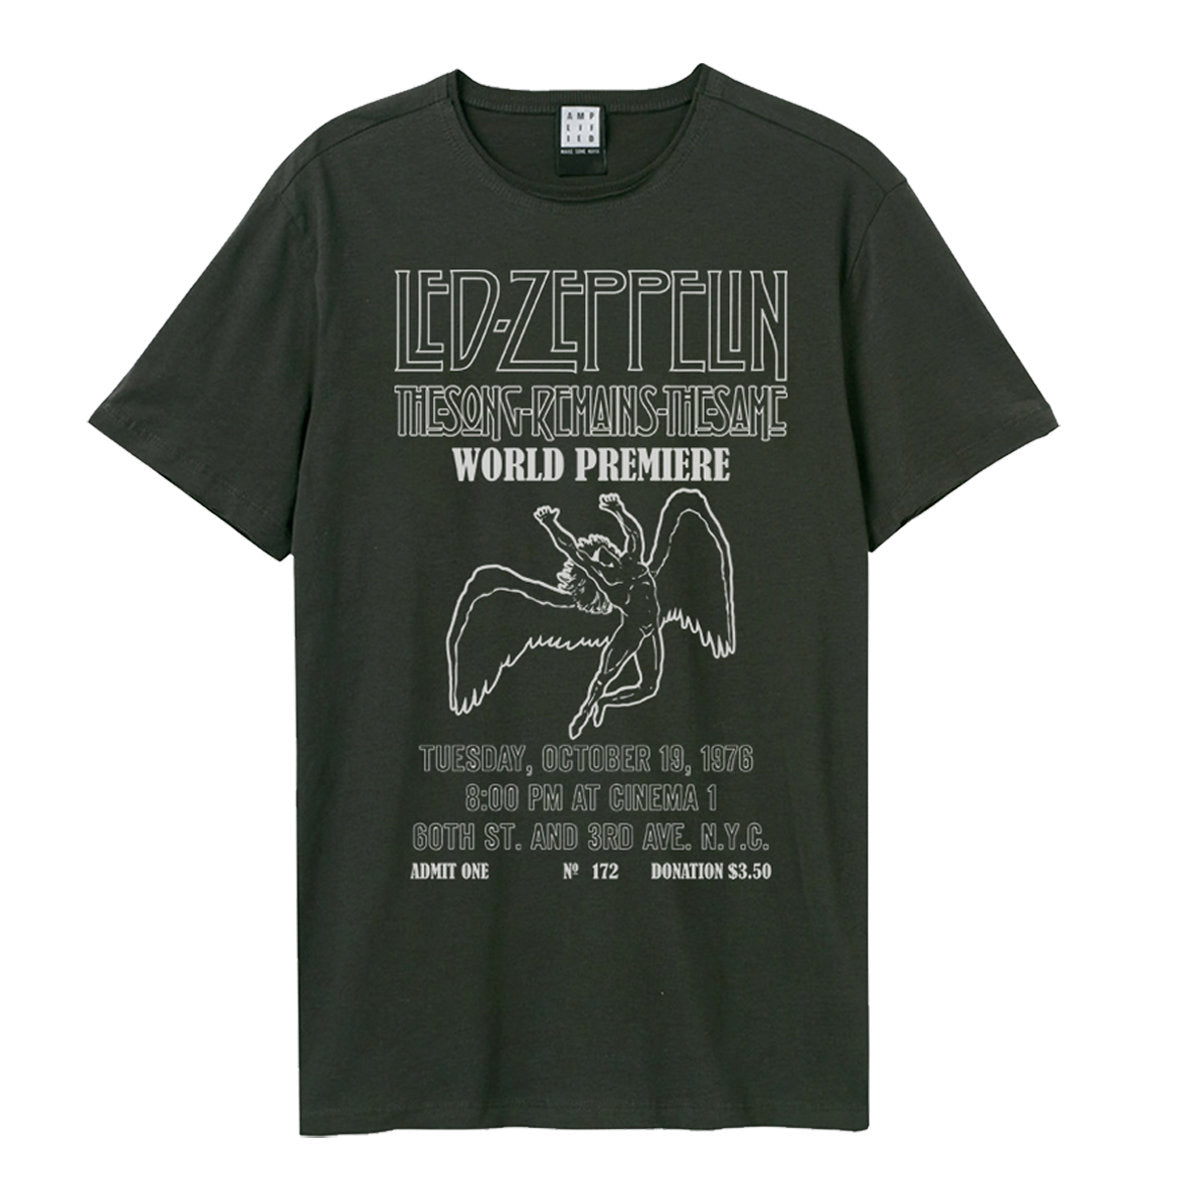 Led Zeppelin T-Shirts London - Backstage